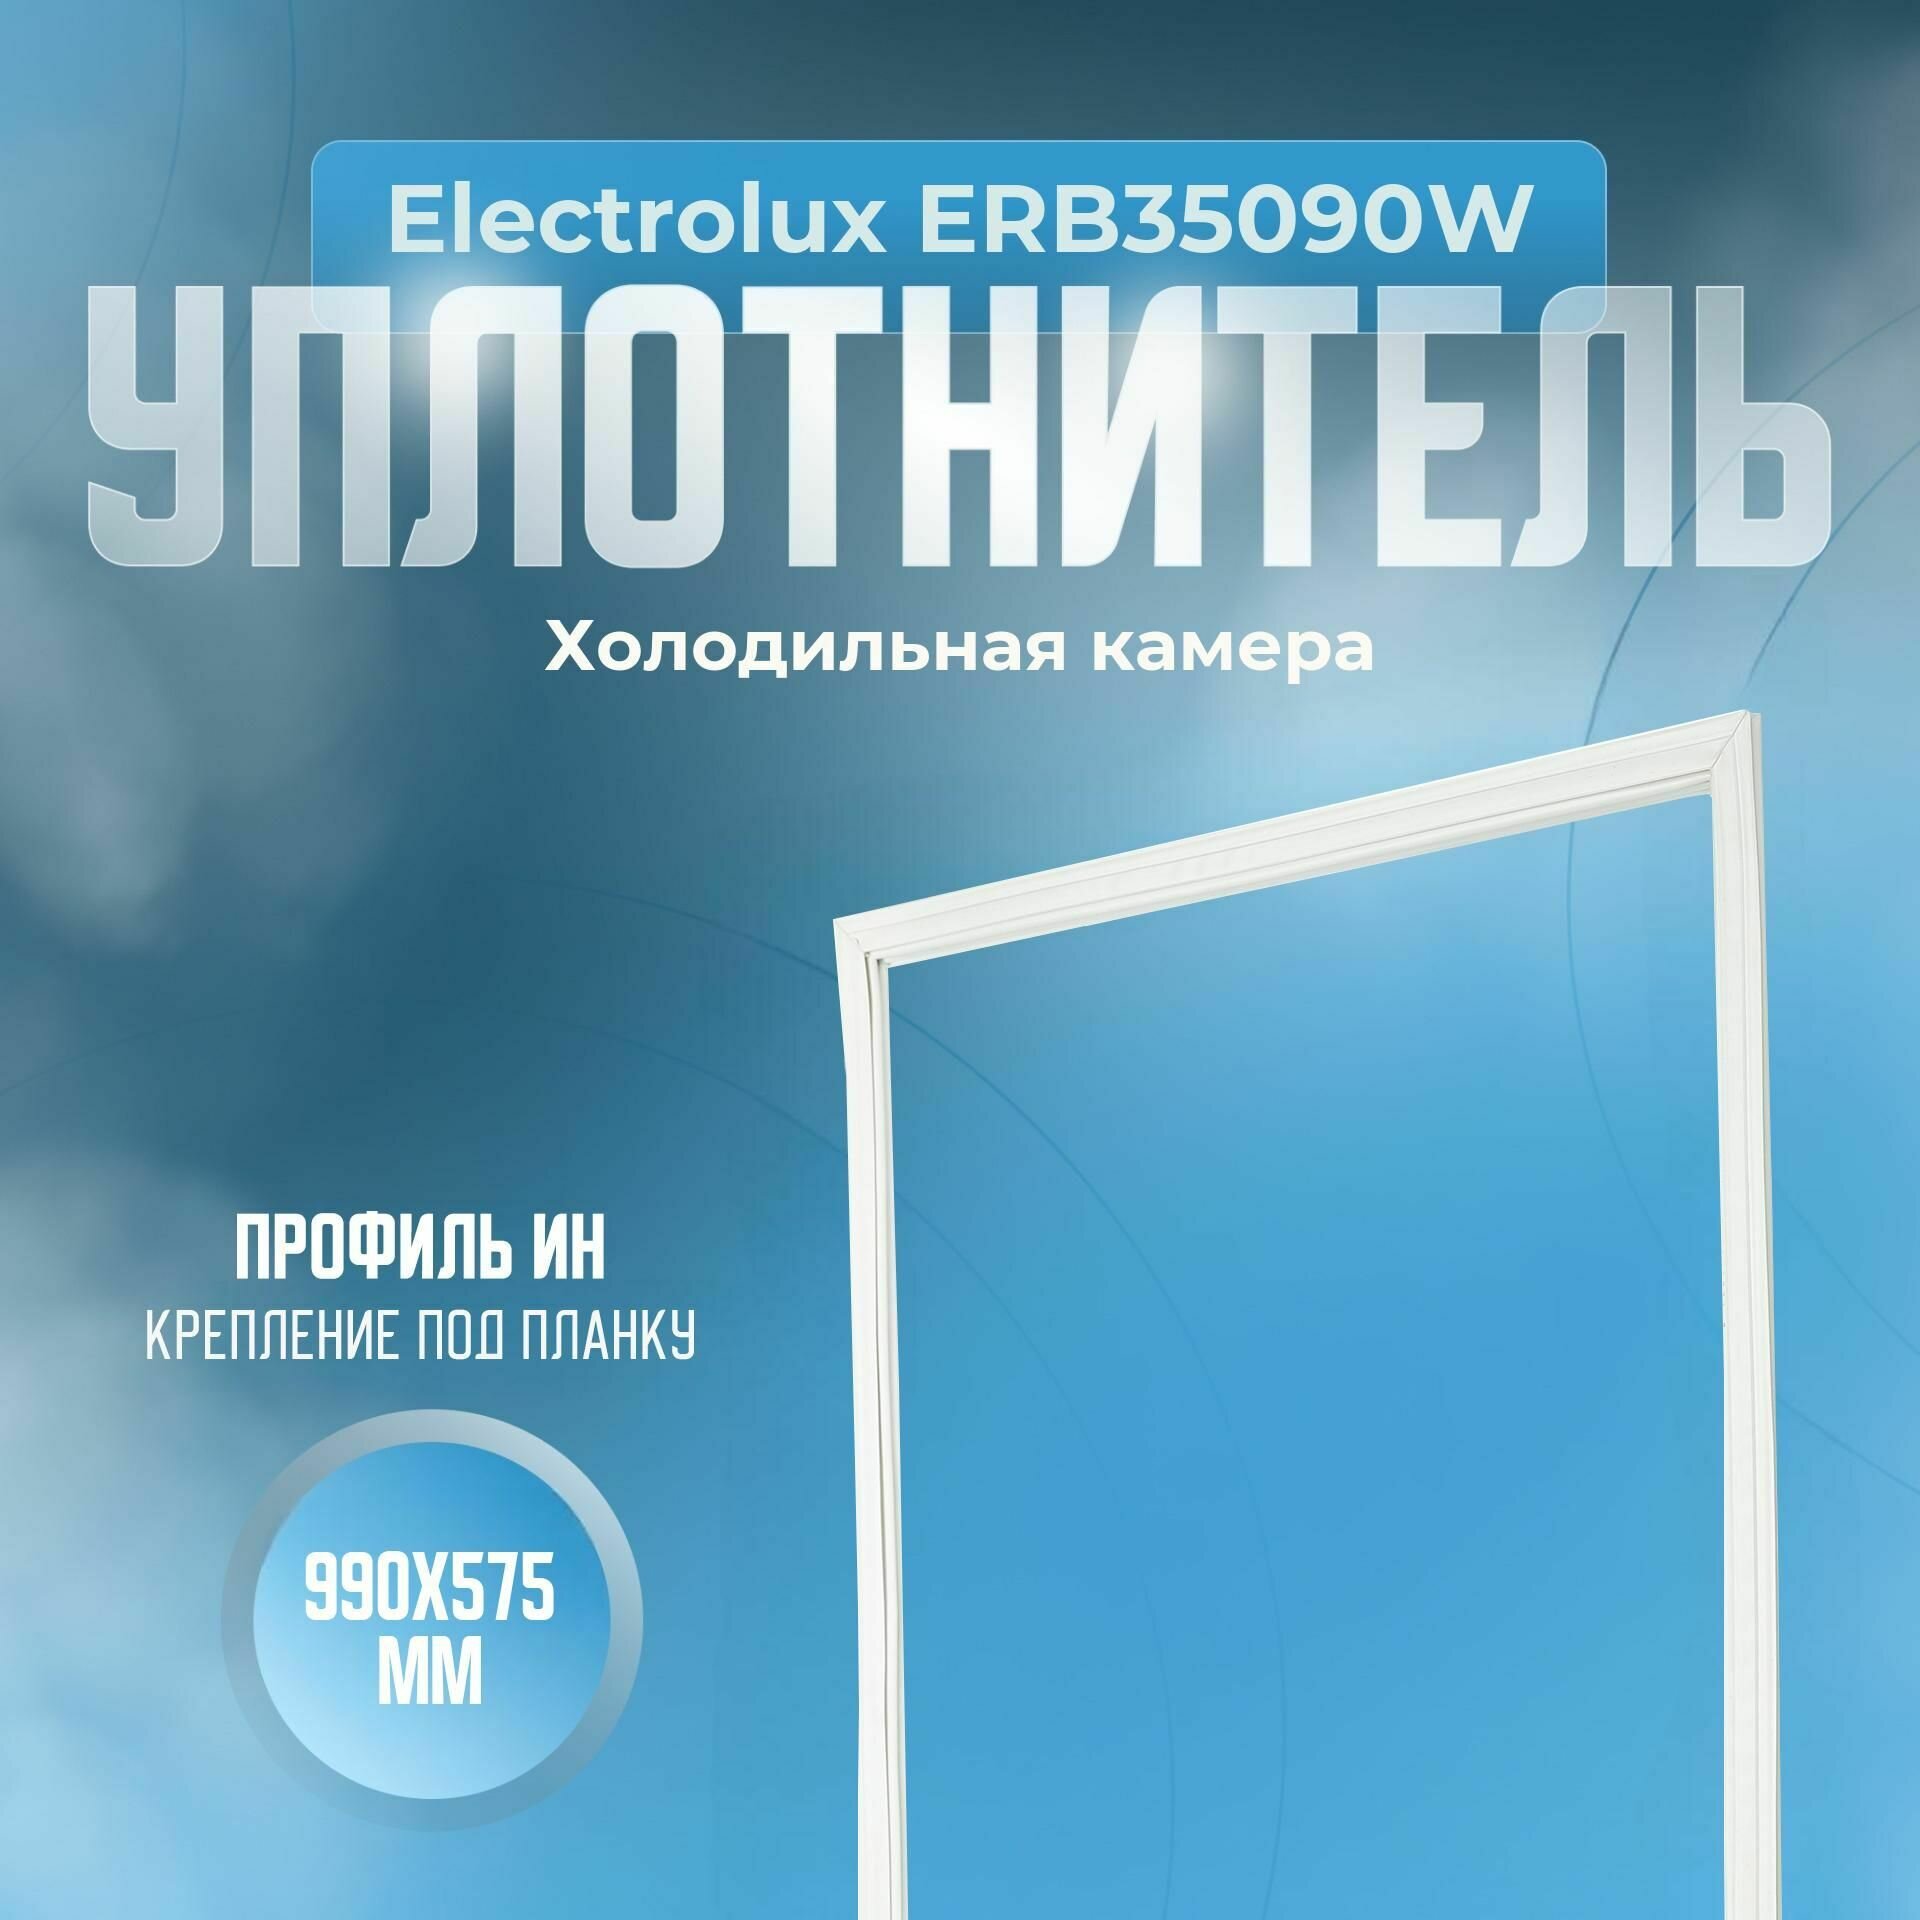 Уплотнитель Electrolux ERB35090W. х. к, Размер - 990х575 мм. ИН